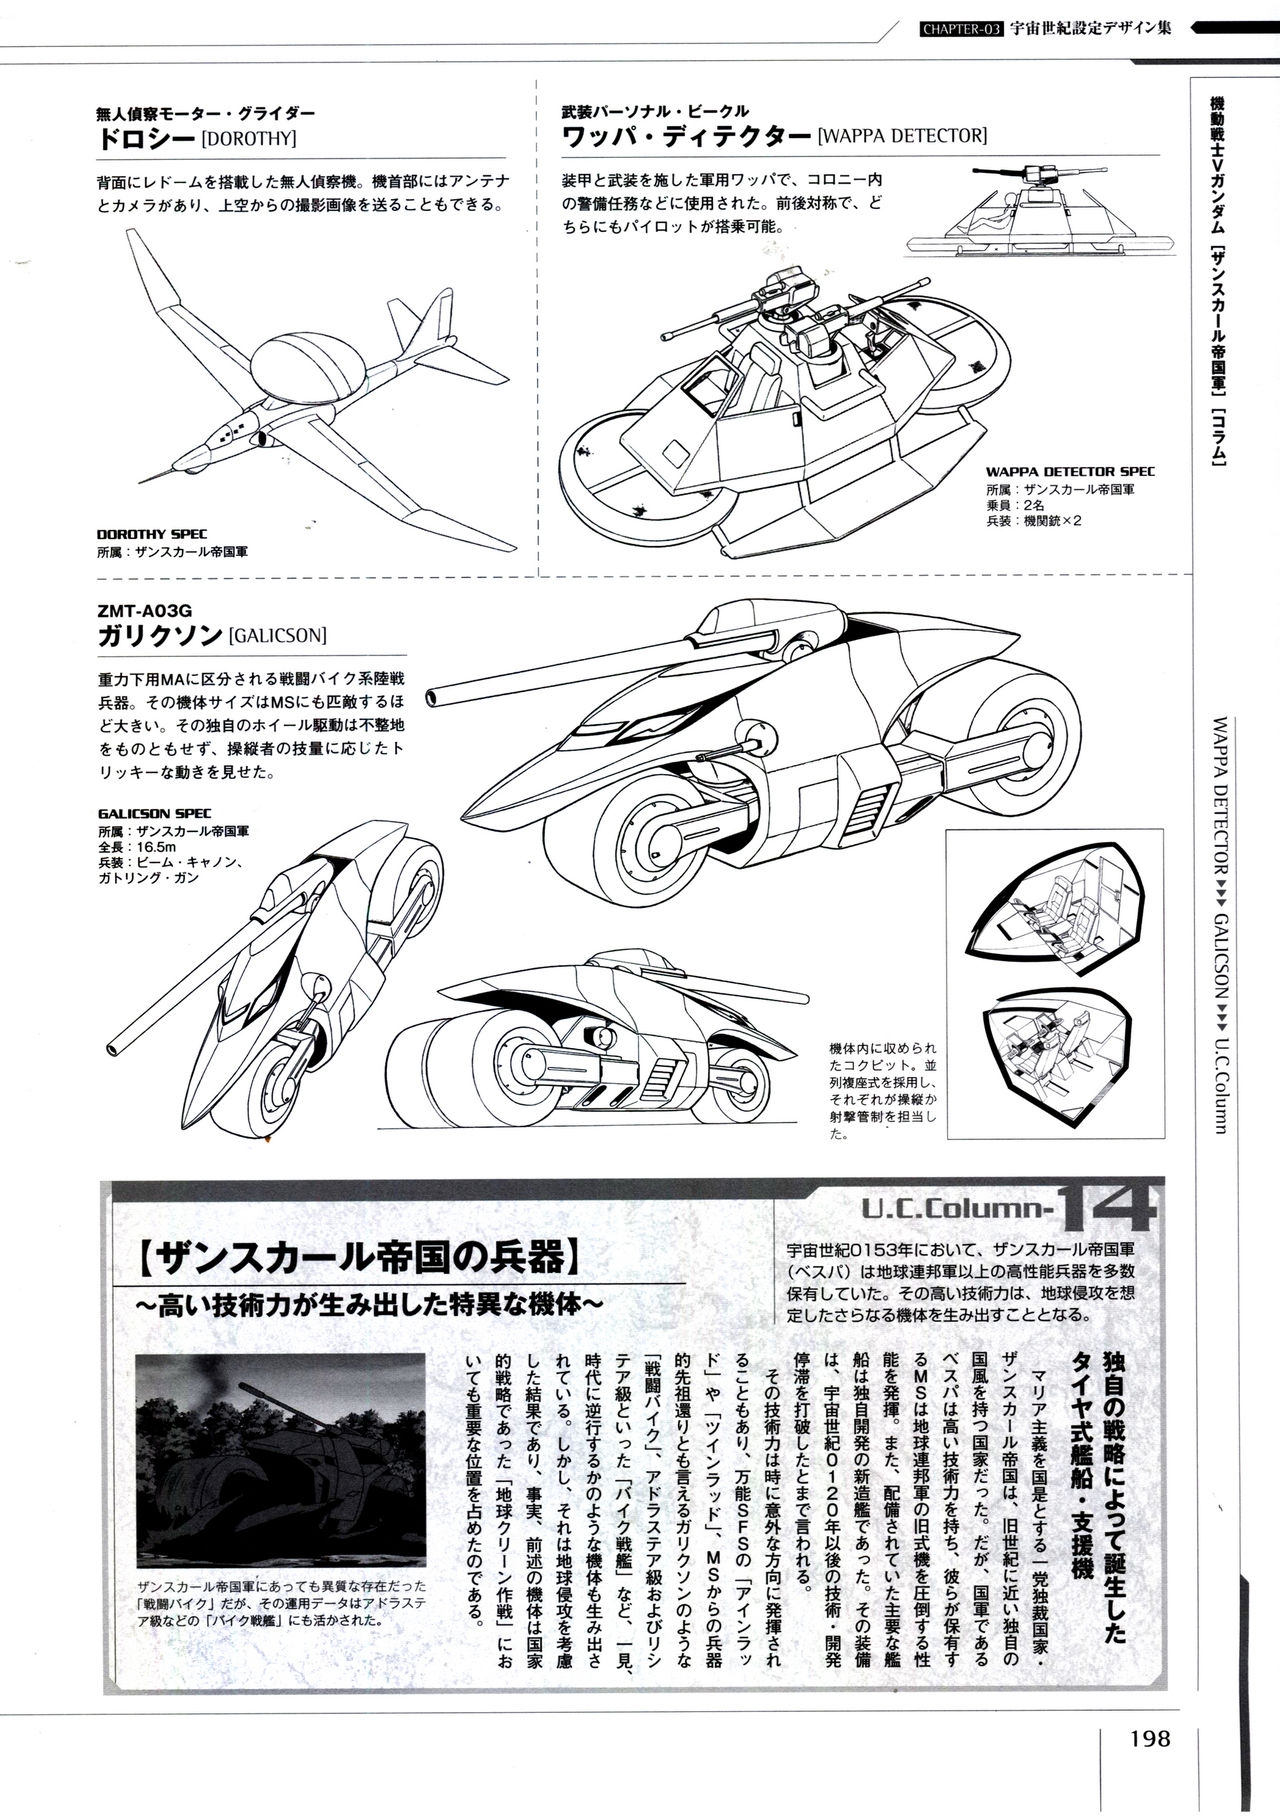 Mobile Suit Gundam - Ship & Aerospace Plane Encyclopedia - Revised Edition 203